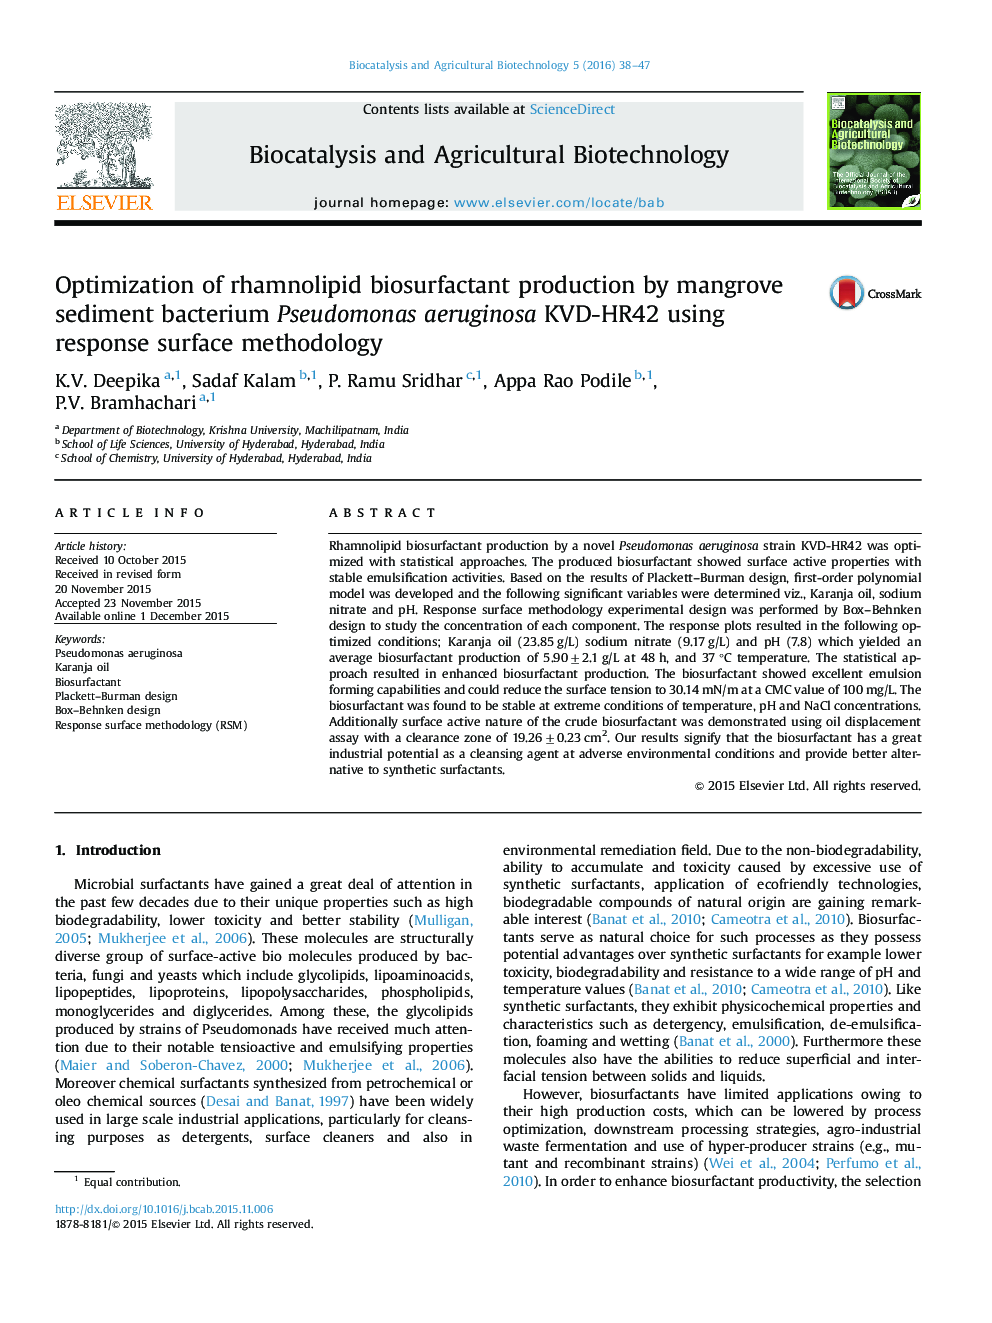 Optimization of rhamnolipid biosurfactant production by mangrove sediment bacterium Pseudomonas aeruginosa KVD-HR42 using response surface methodology